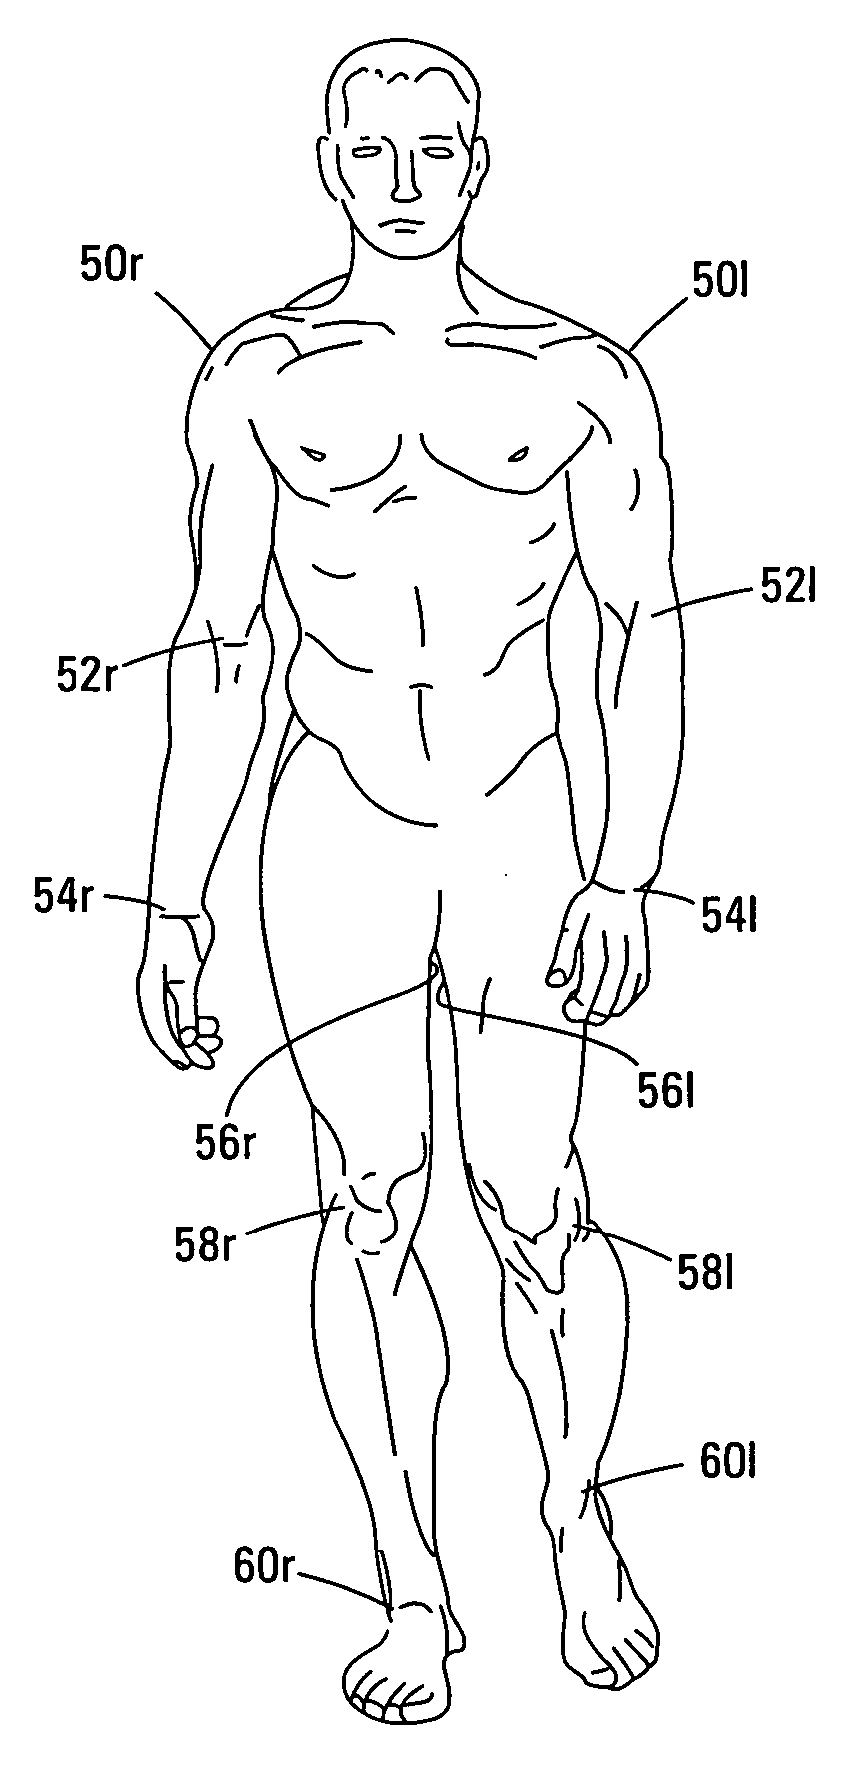 Method of passively loading an endoskeletal animal's body